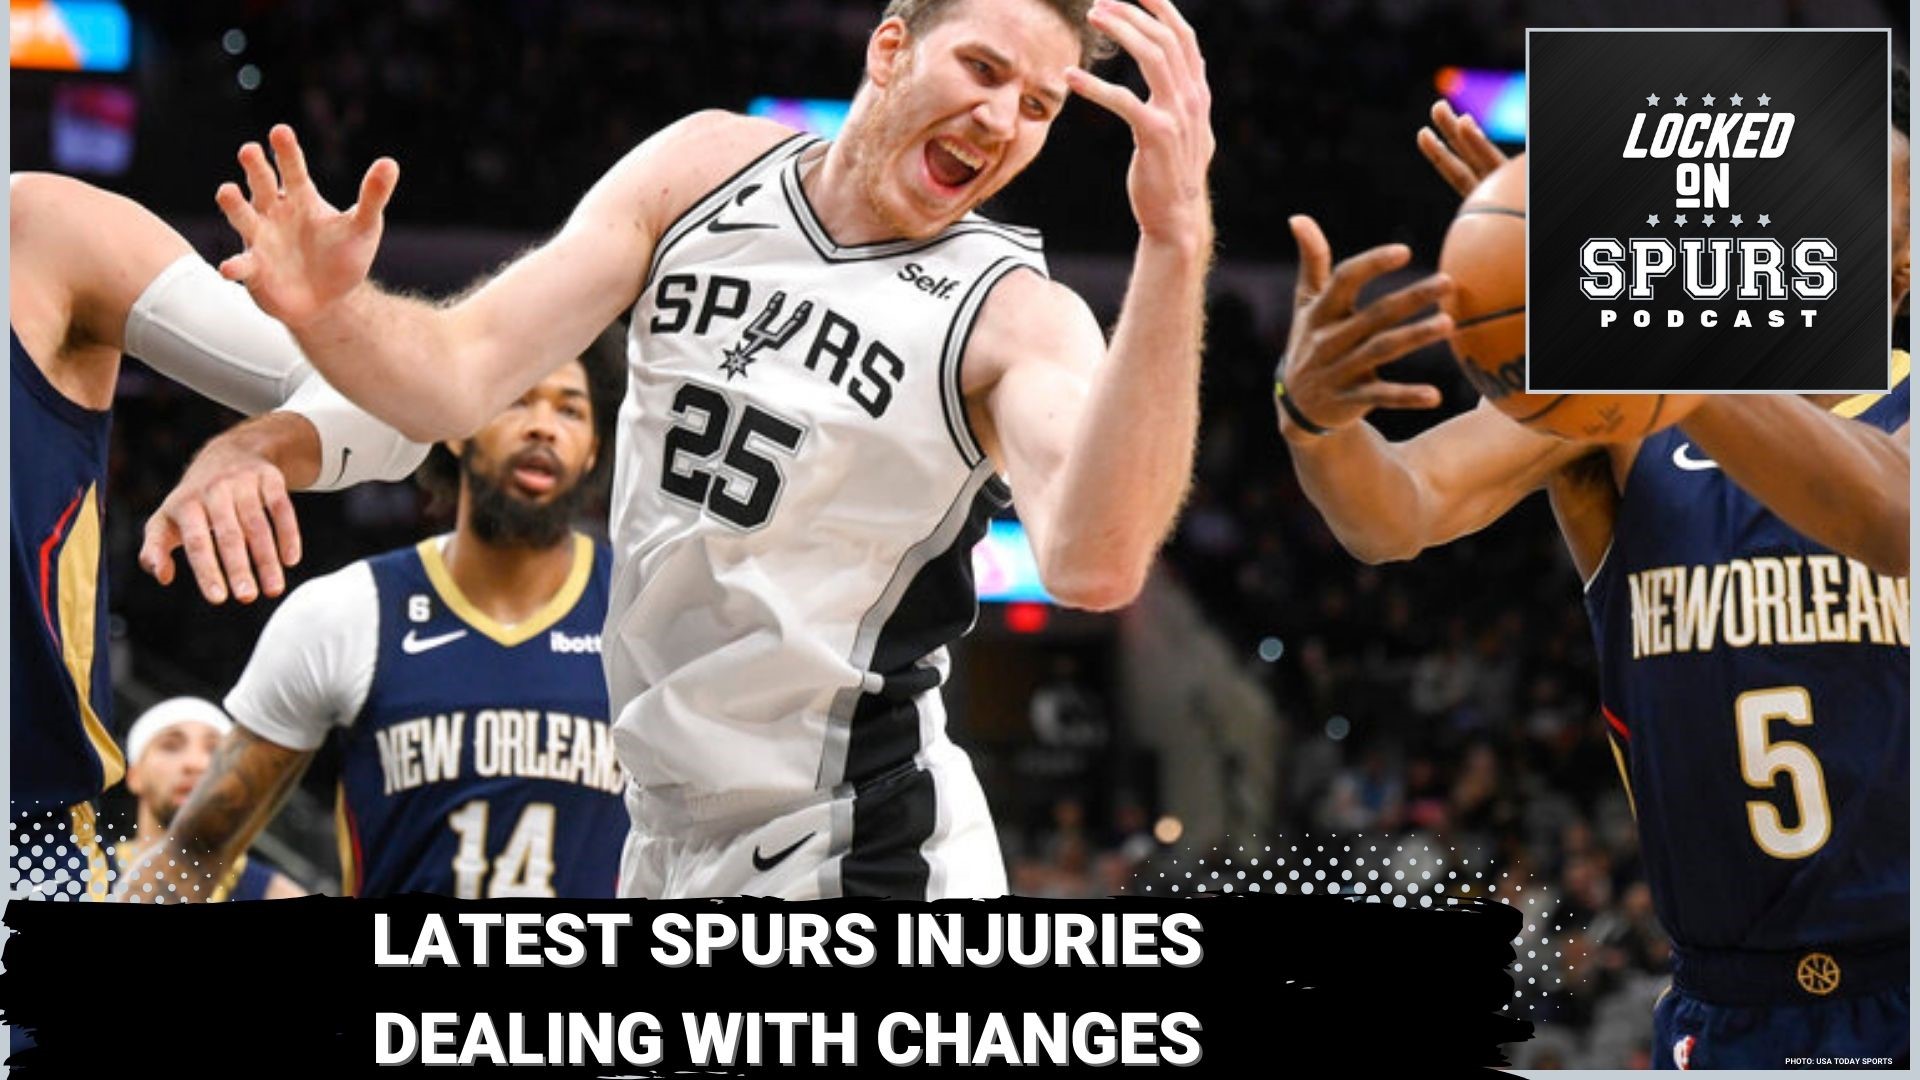 San Antonio Spurs Team Info and News